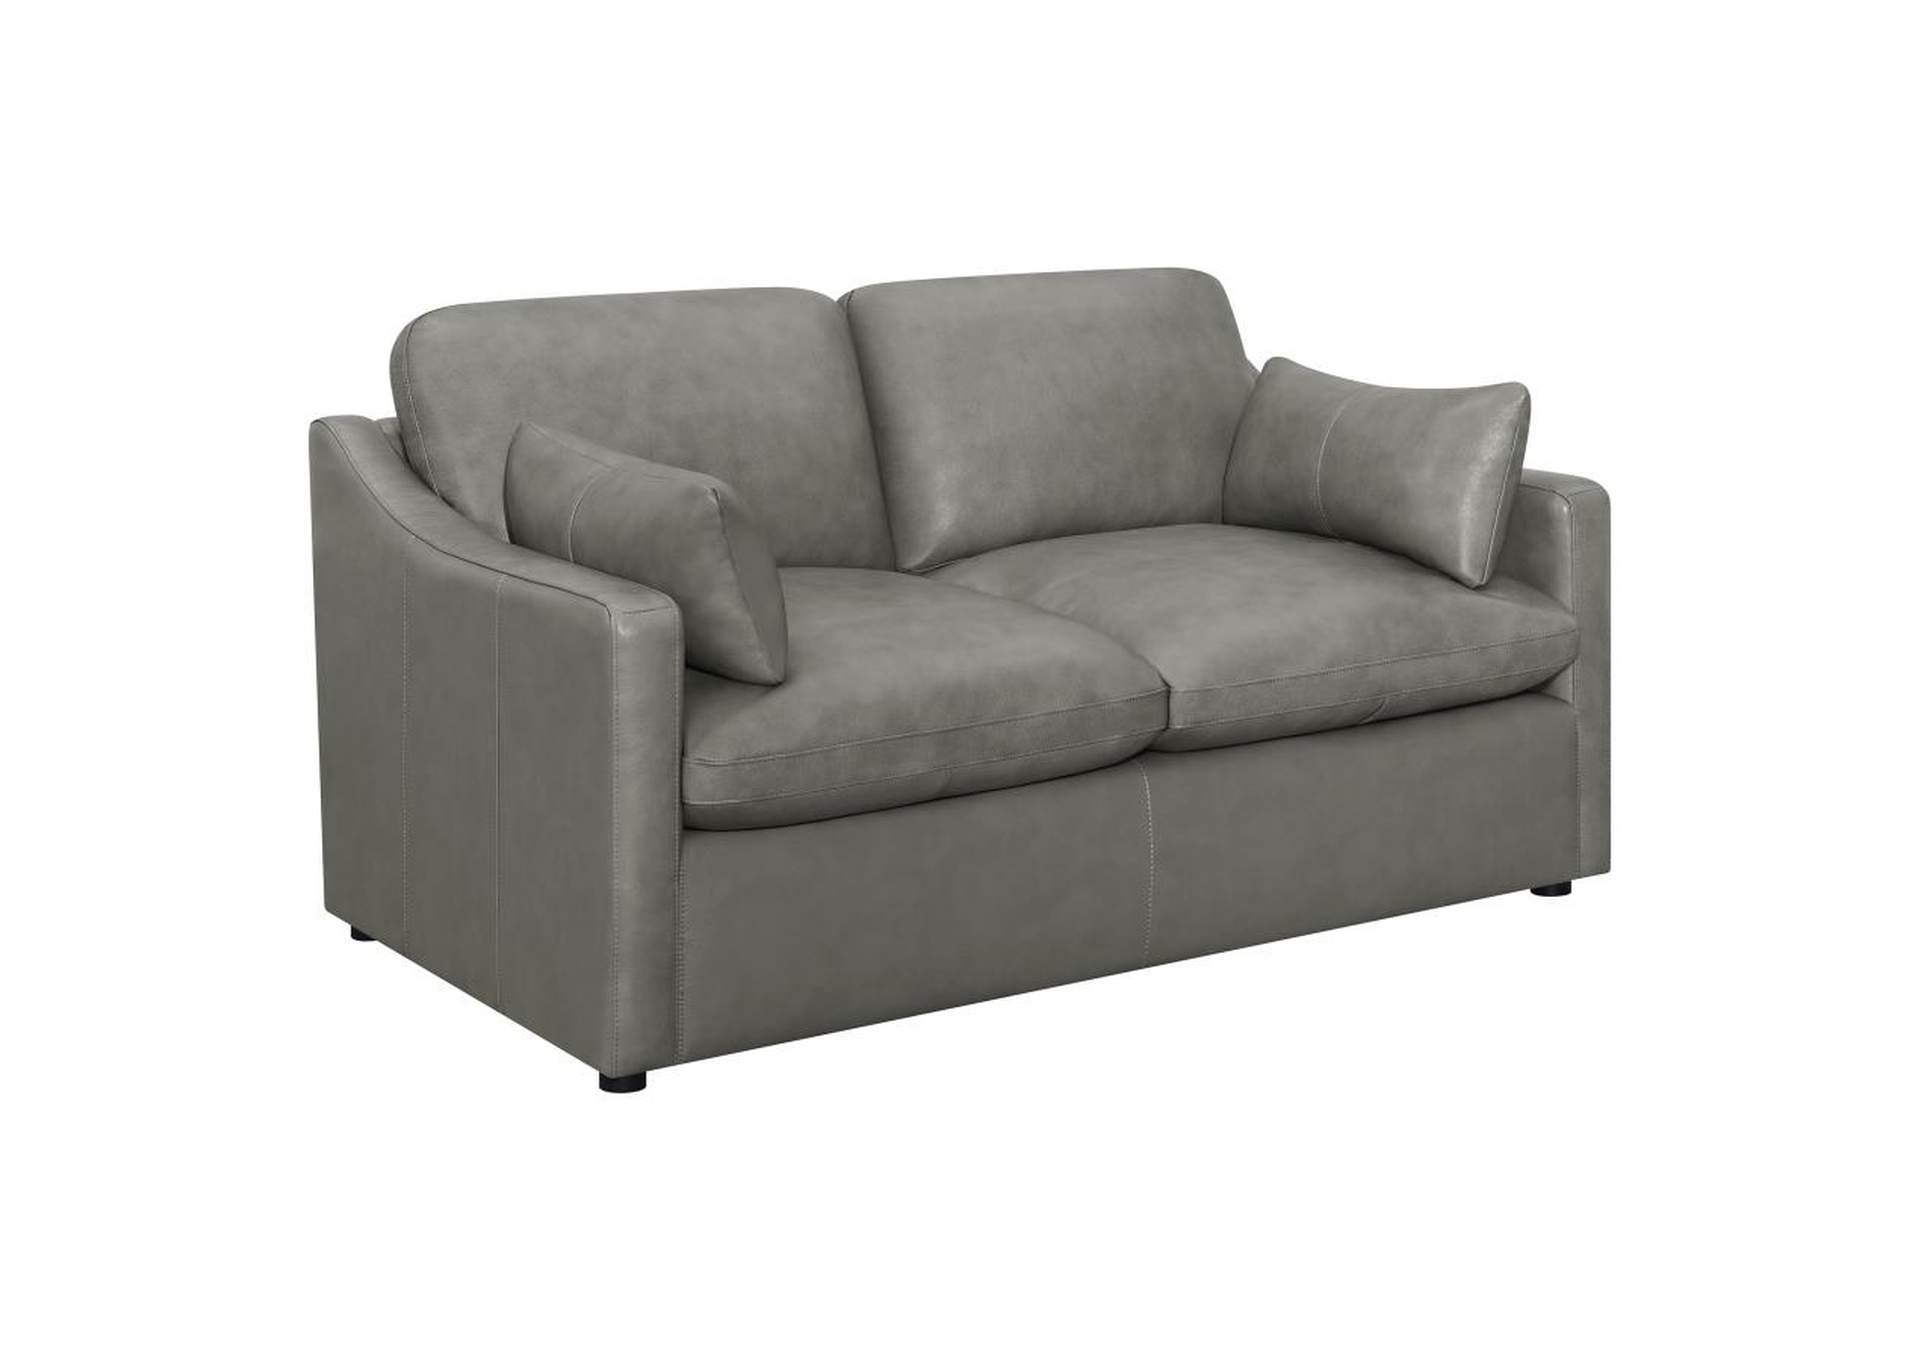 Grayson 3 - piece Sloped Arm Upholstered Living Room Set Grey,Coaster Furniture